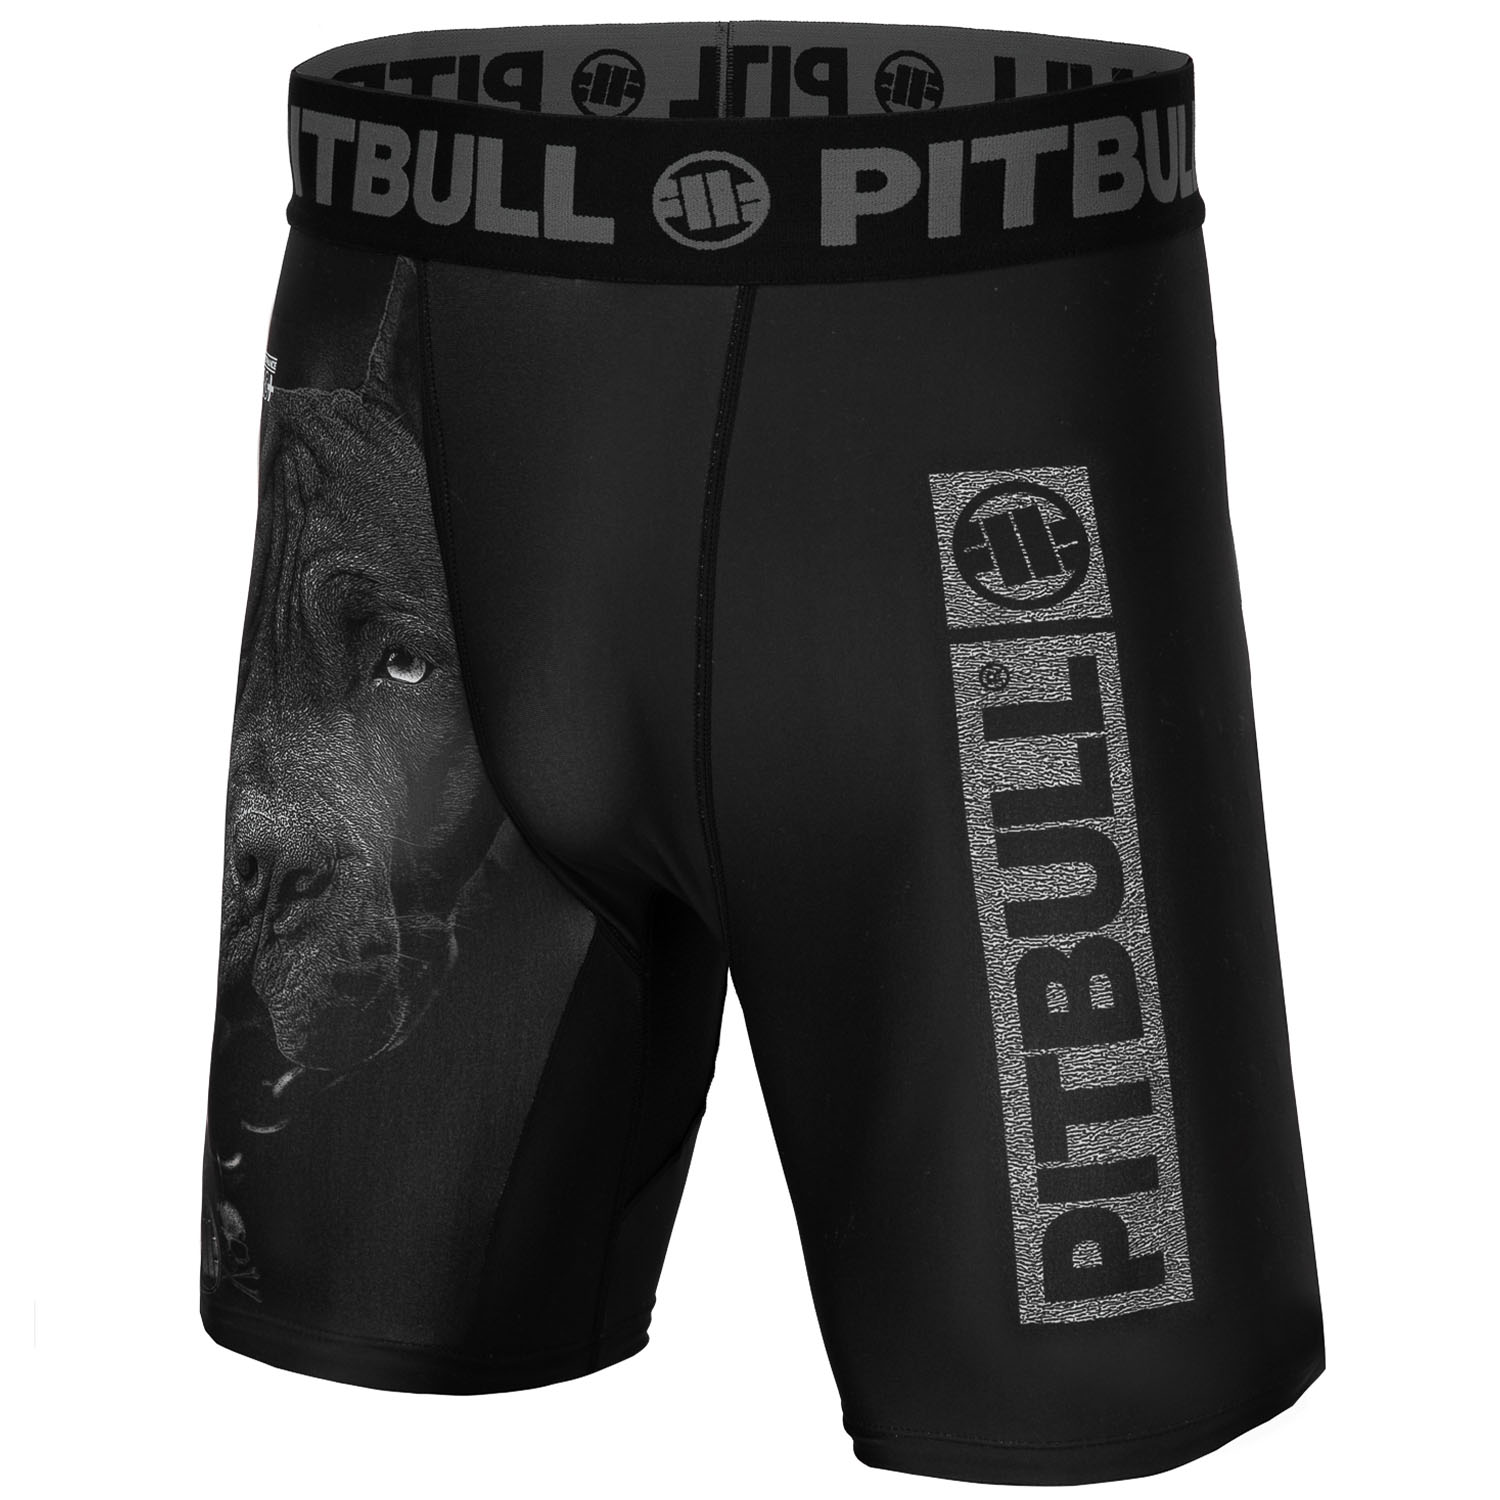 Pit Bull West Coast Compression Shorts, Born In 1989, schwarz